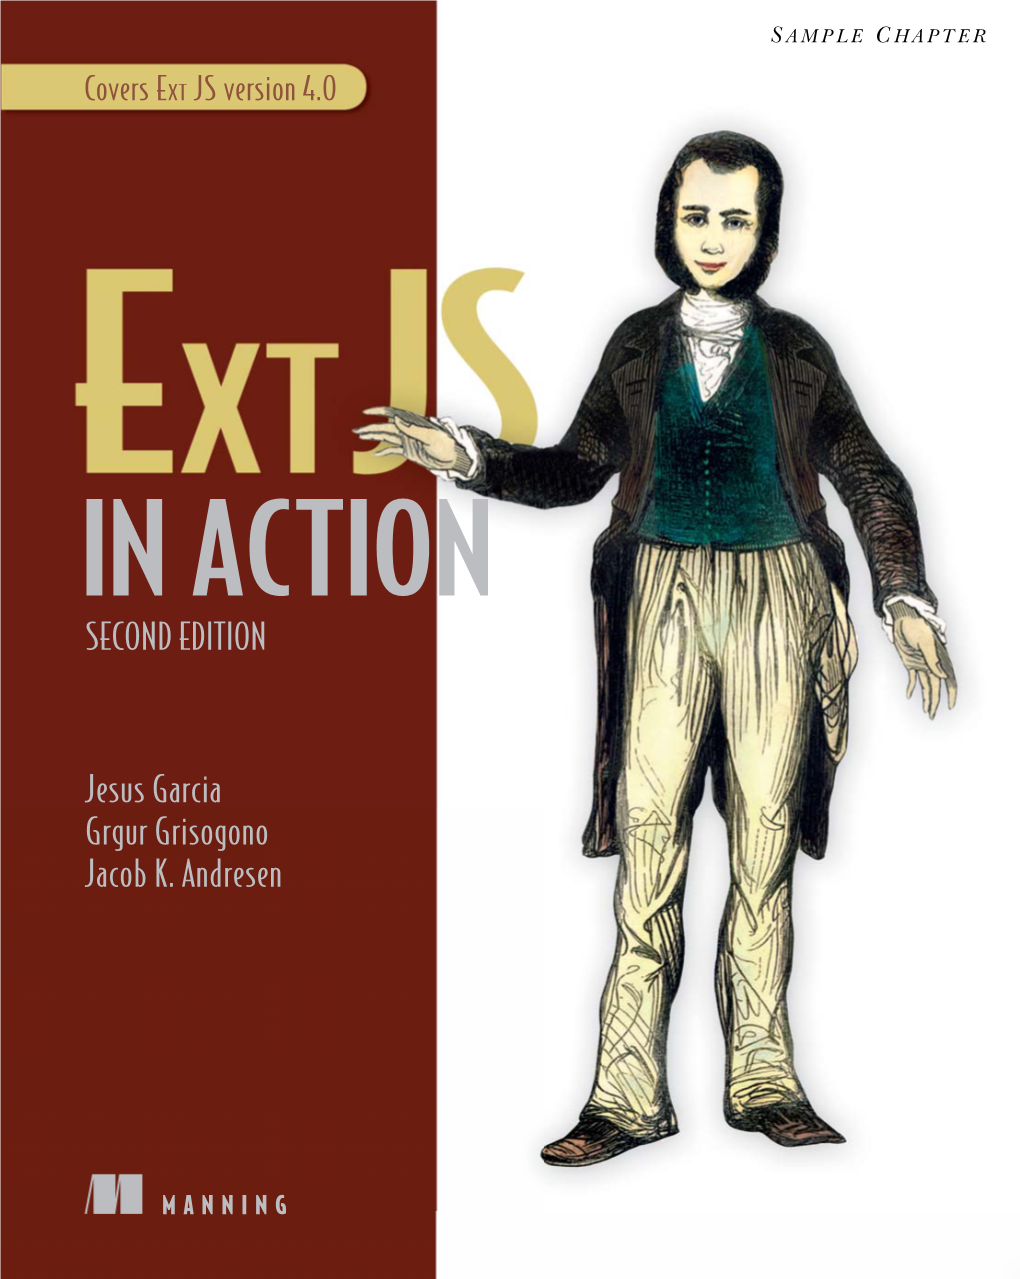 Ext JS in Action, Second Edition by Jesus Garcia Grgur Grisogono Jacob K